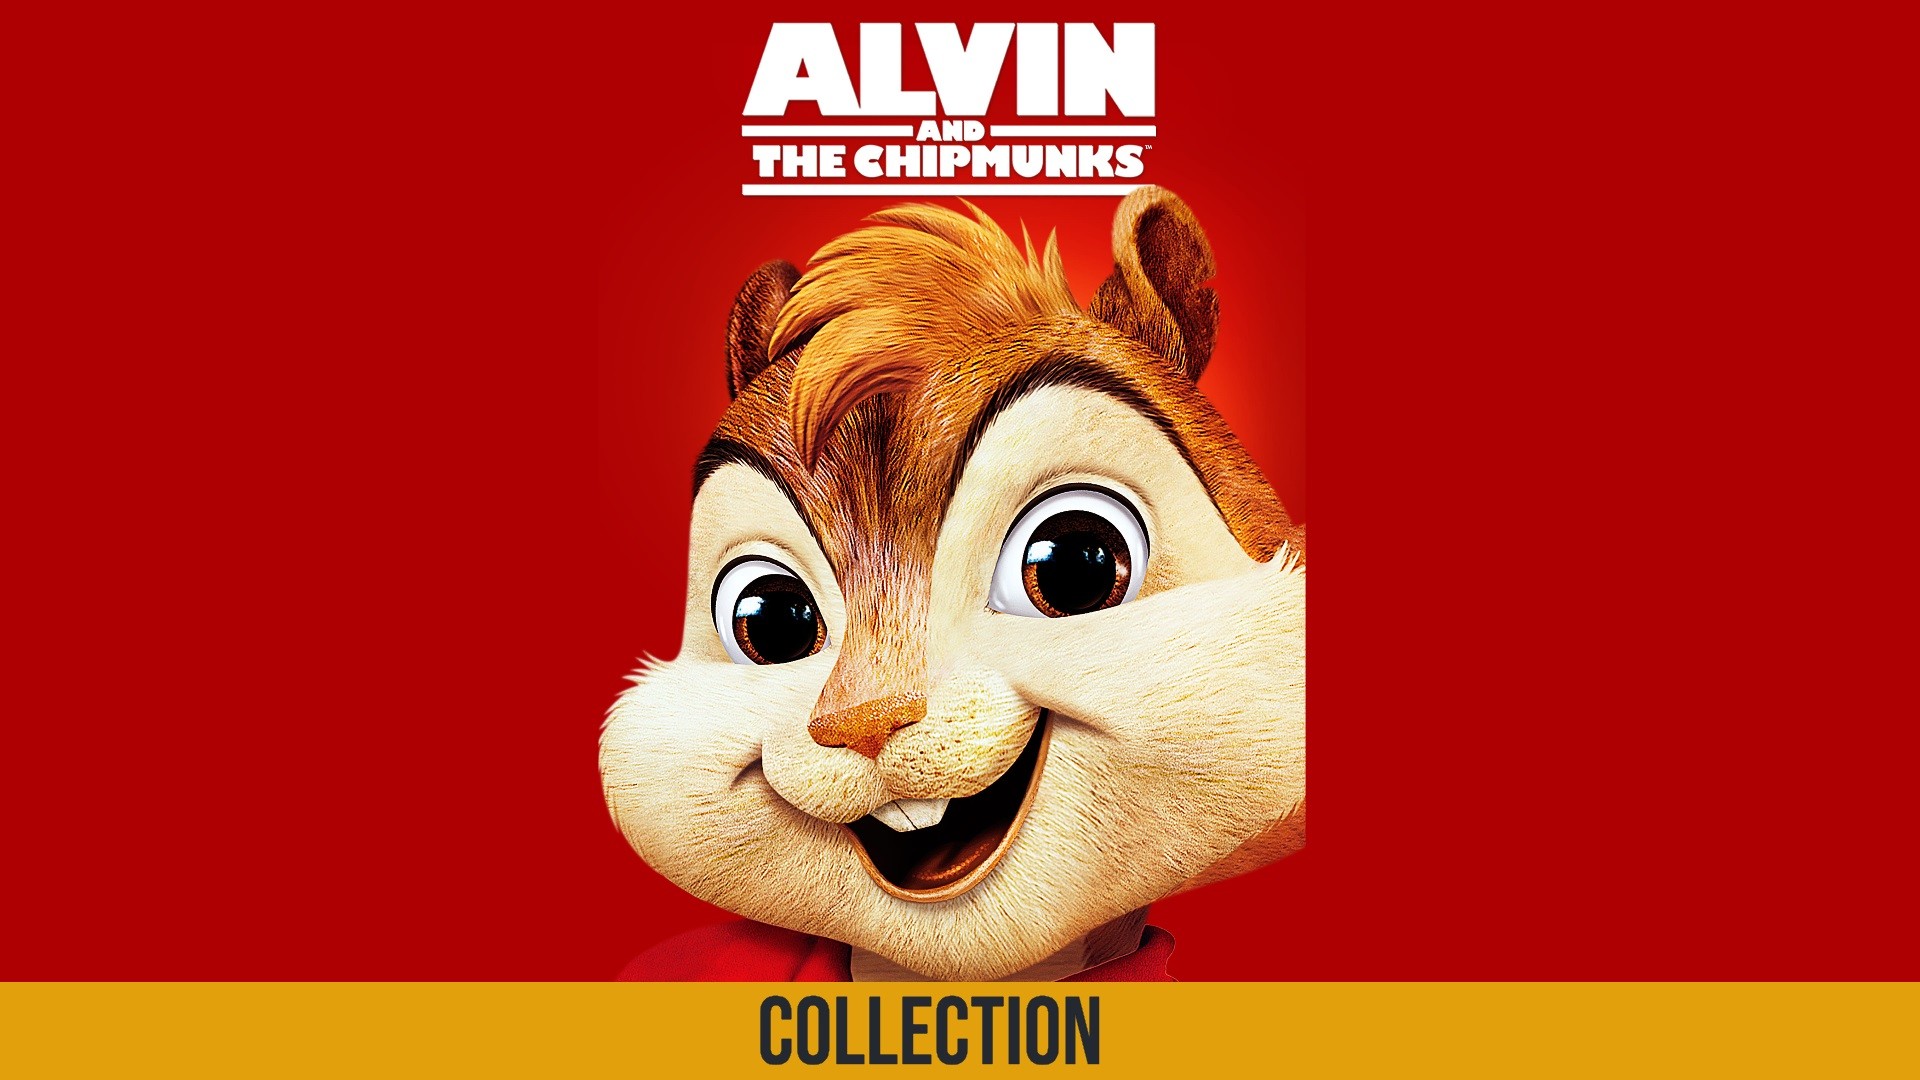 Alvin and the chipmunks ending